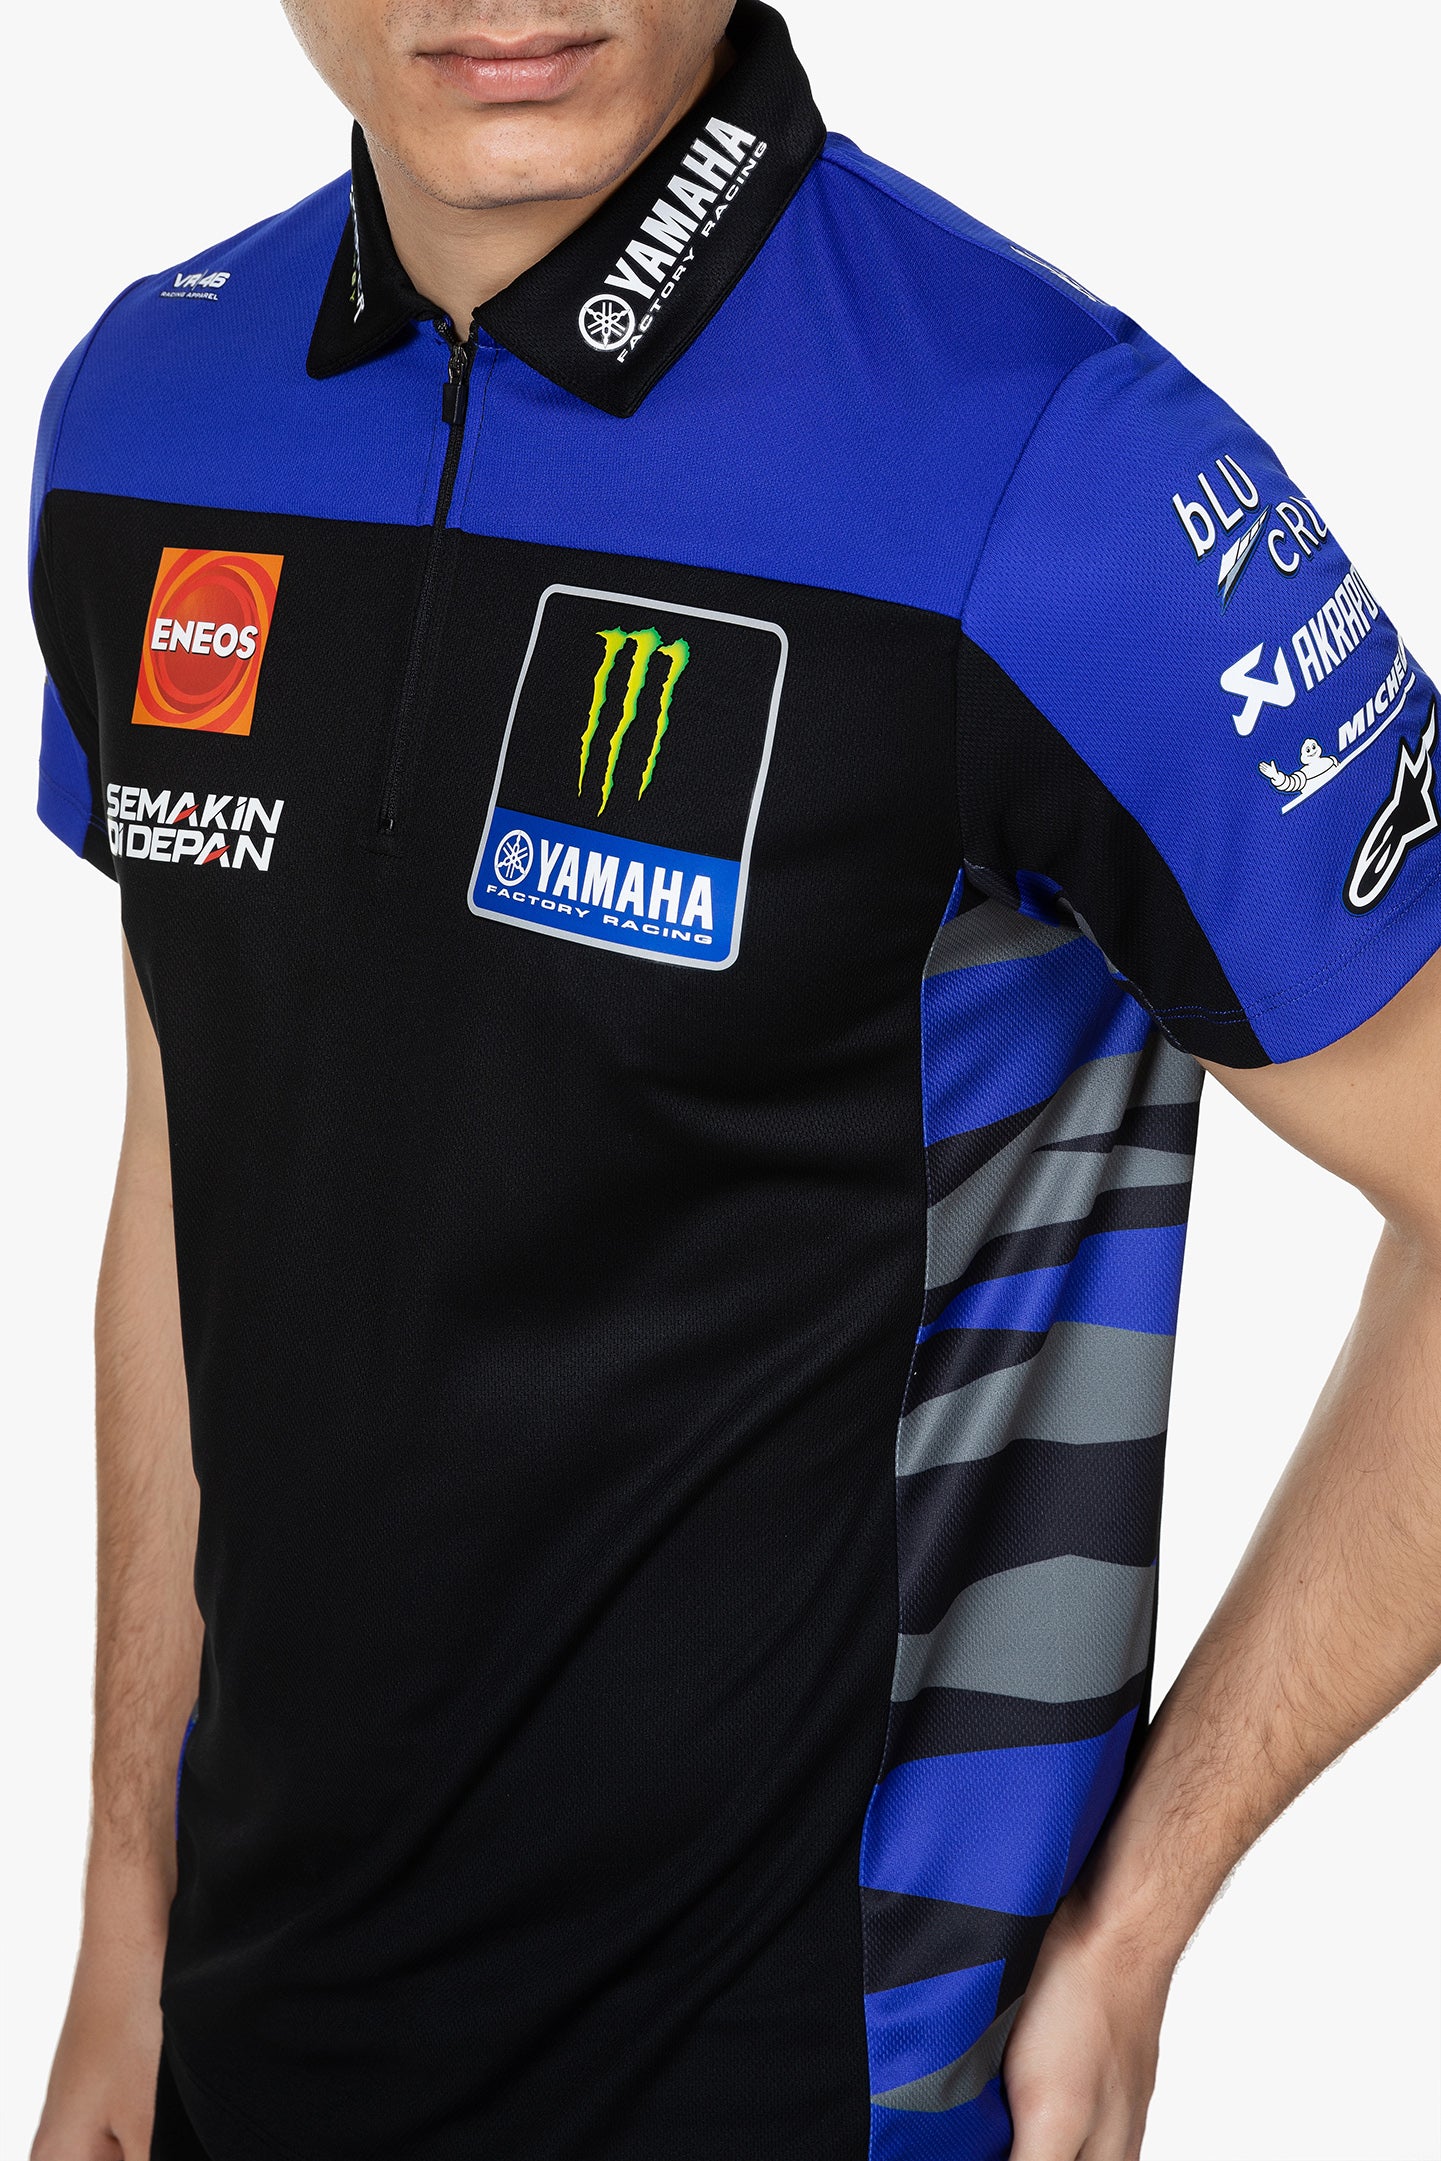 Abbigliamento Ufficiale Yamaha e Team Monster MotoGP - Masci Moto